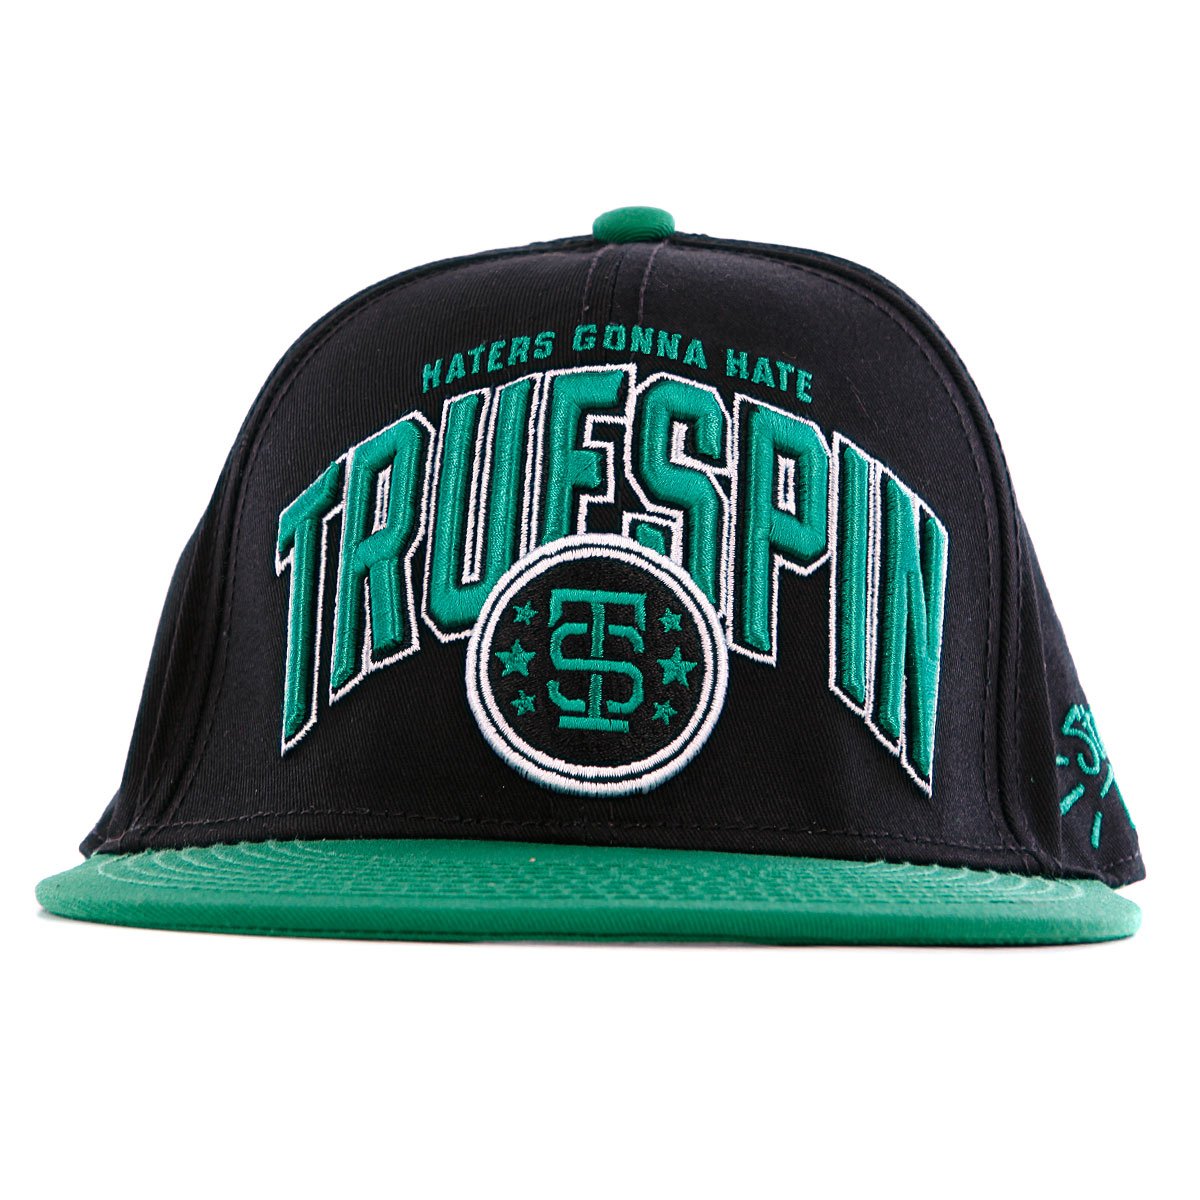 Бейсболка True Spin True Spin-2 Black/Green